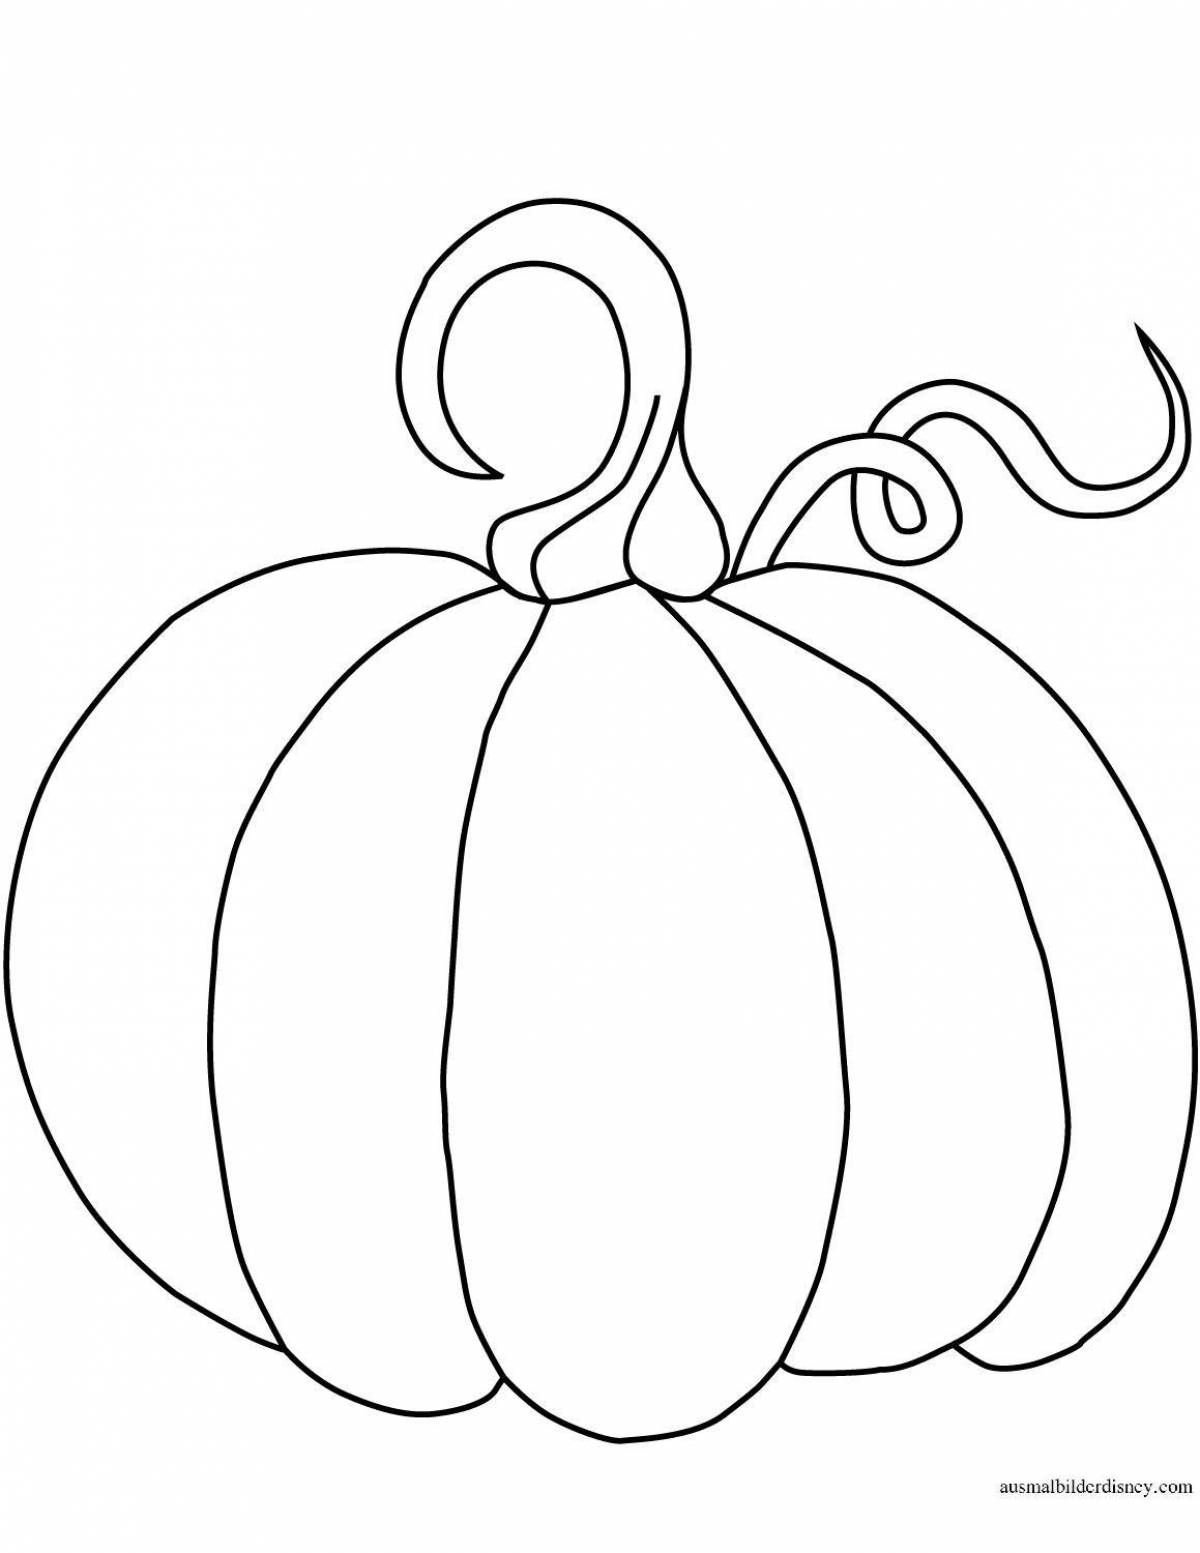 Creative pumpkin coloring book for kids